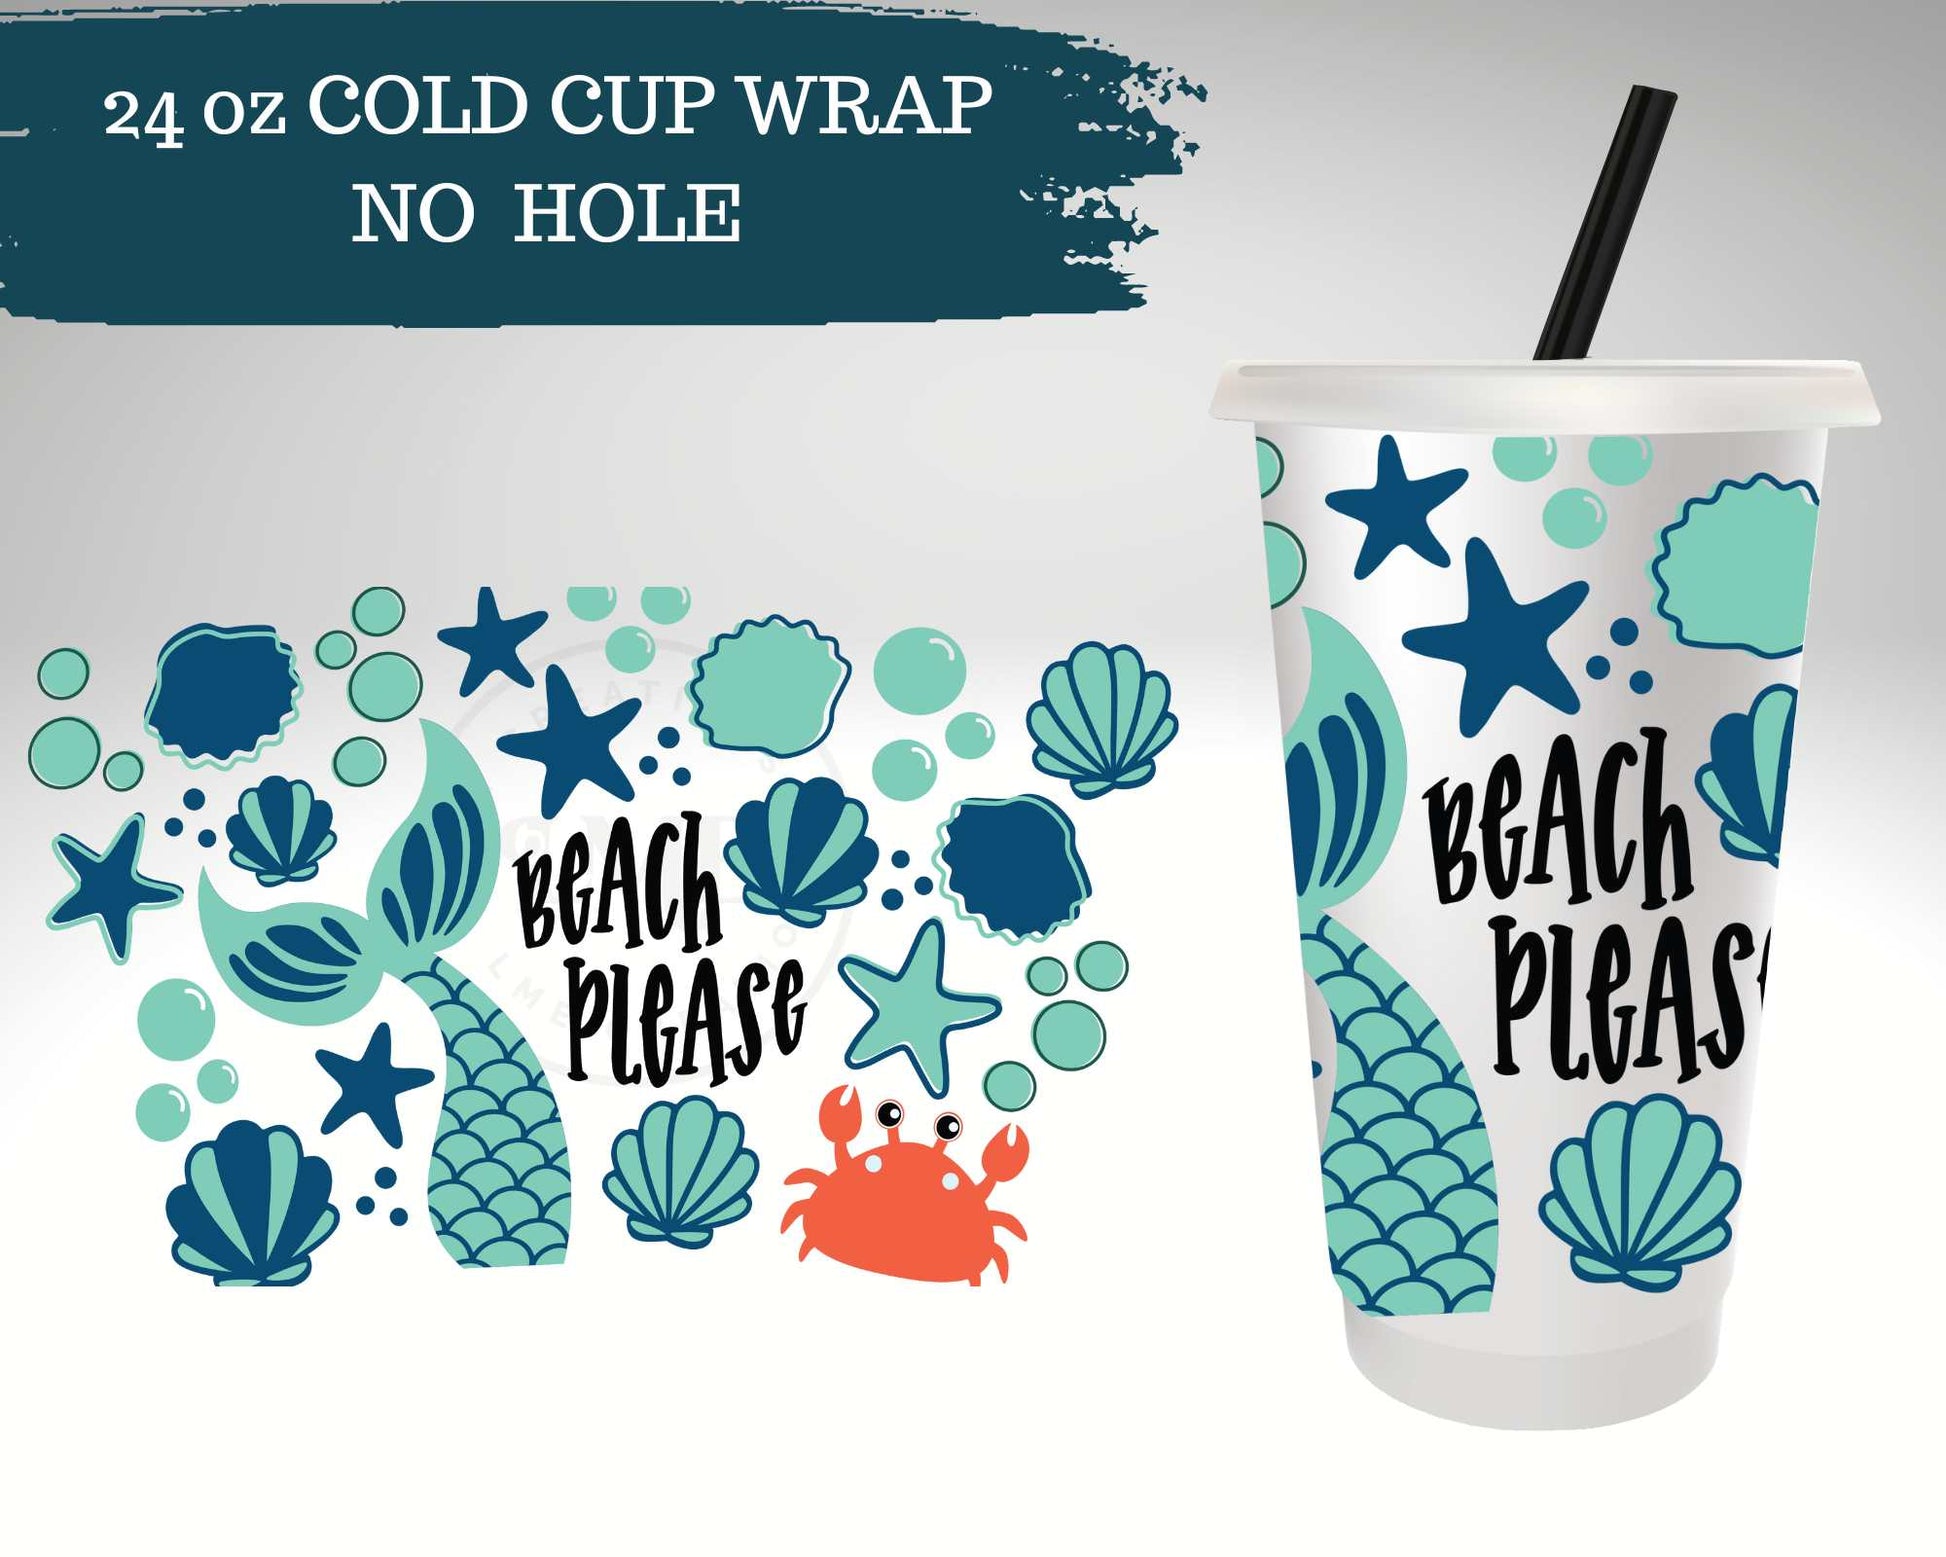 Beach Please | NO HOLE |  Cold Cup Wrap